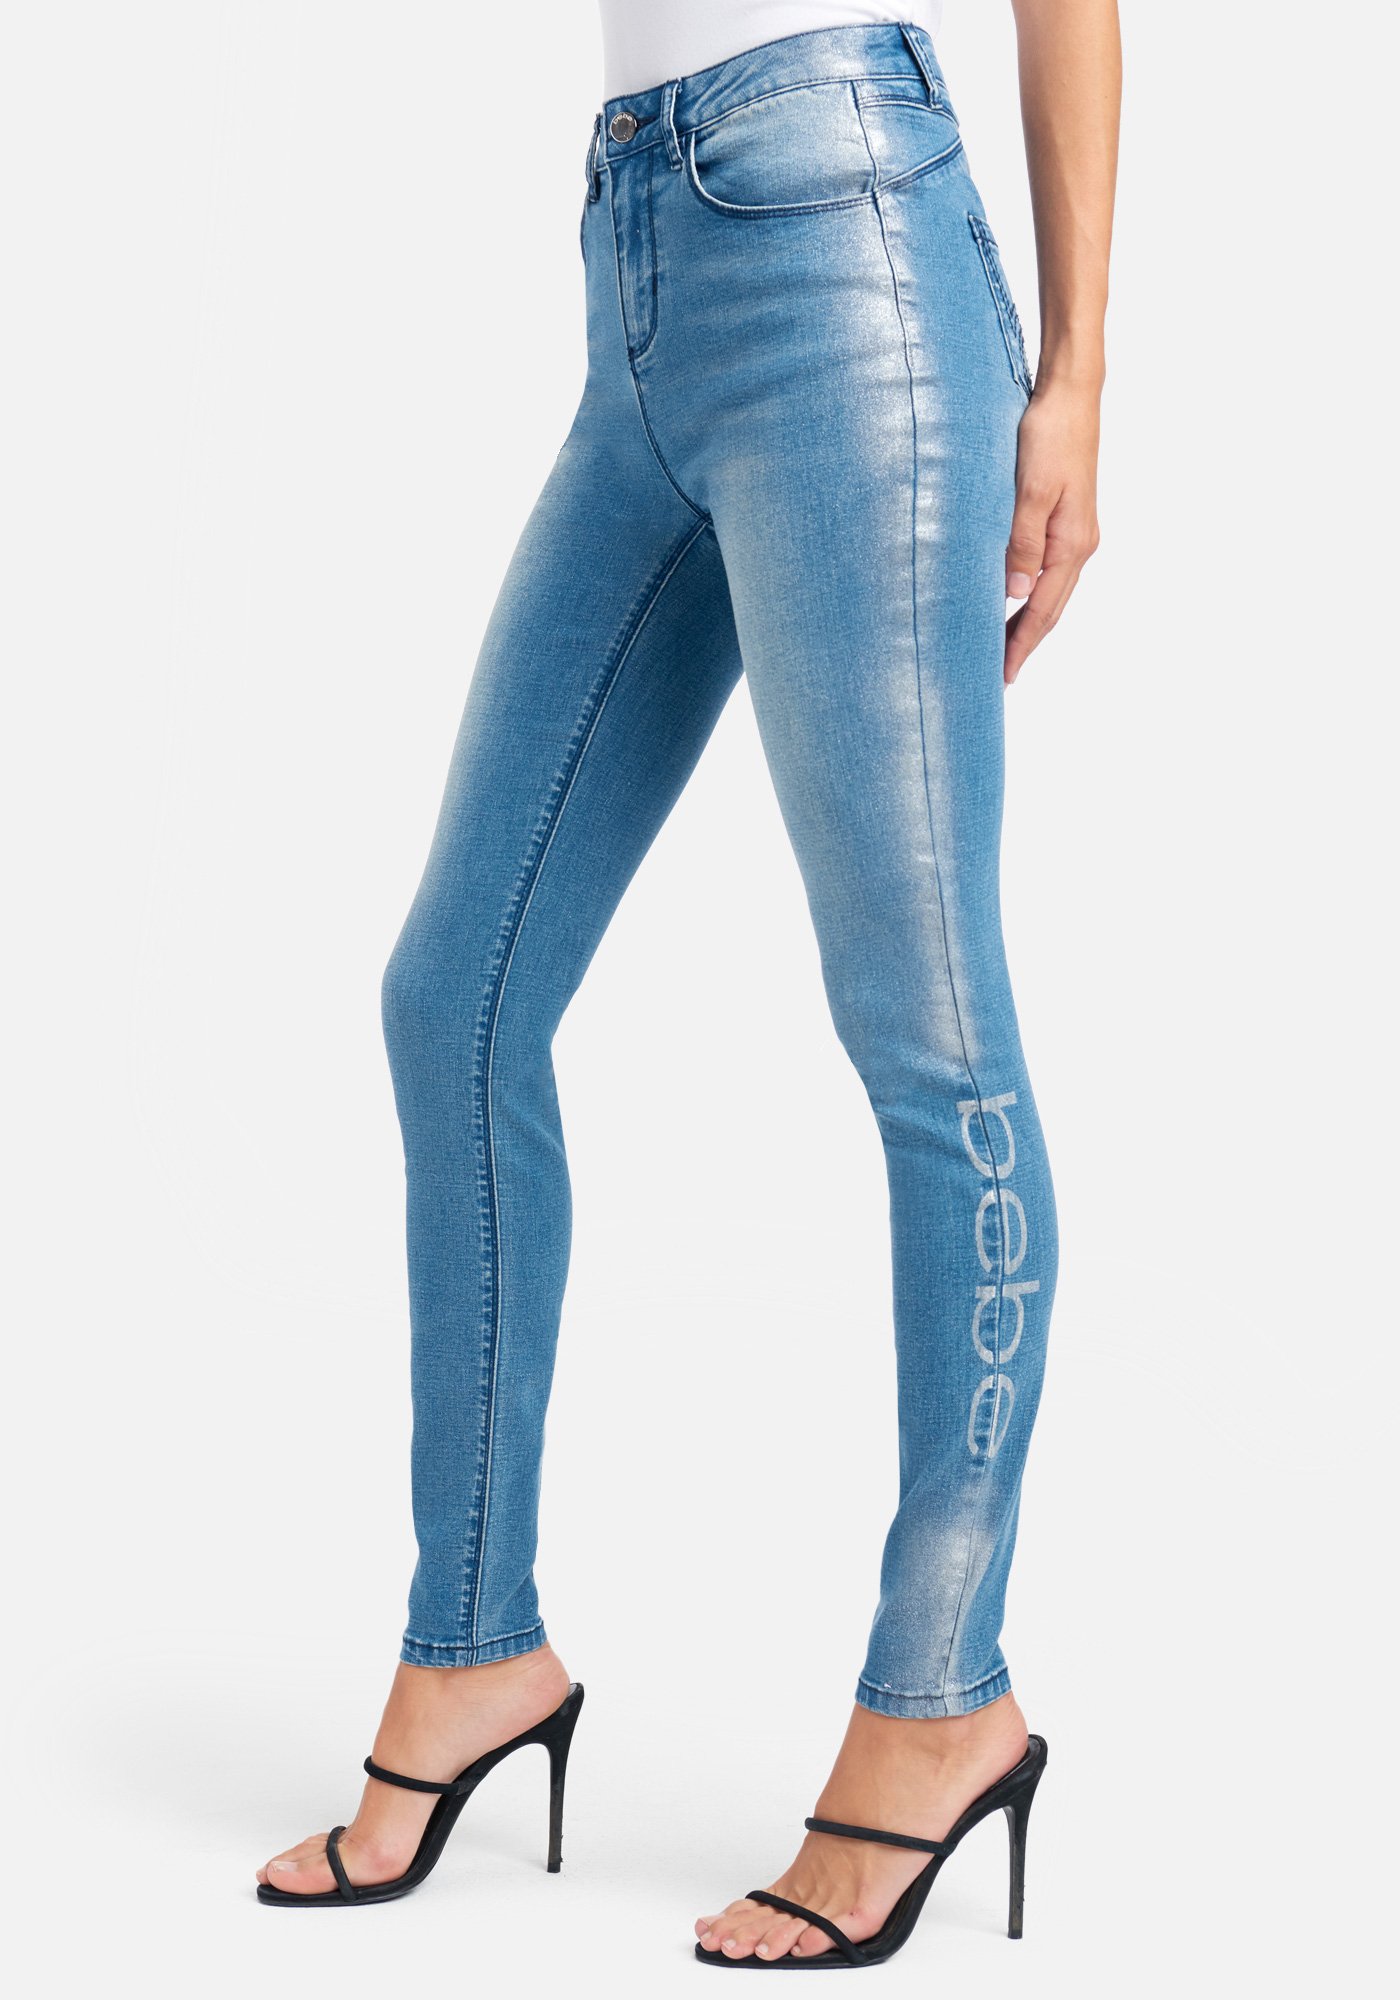 Women's Bebe Logo Jeans, Size 32 in Medium Blue Wash Cotton/Spandex